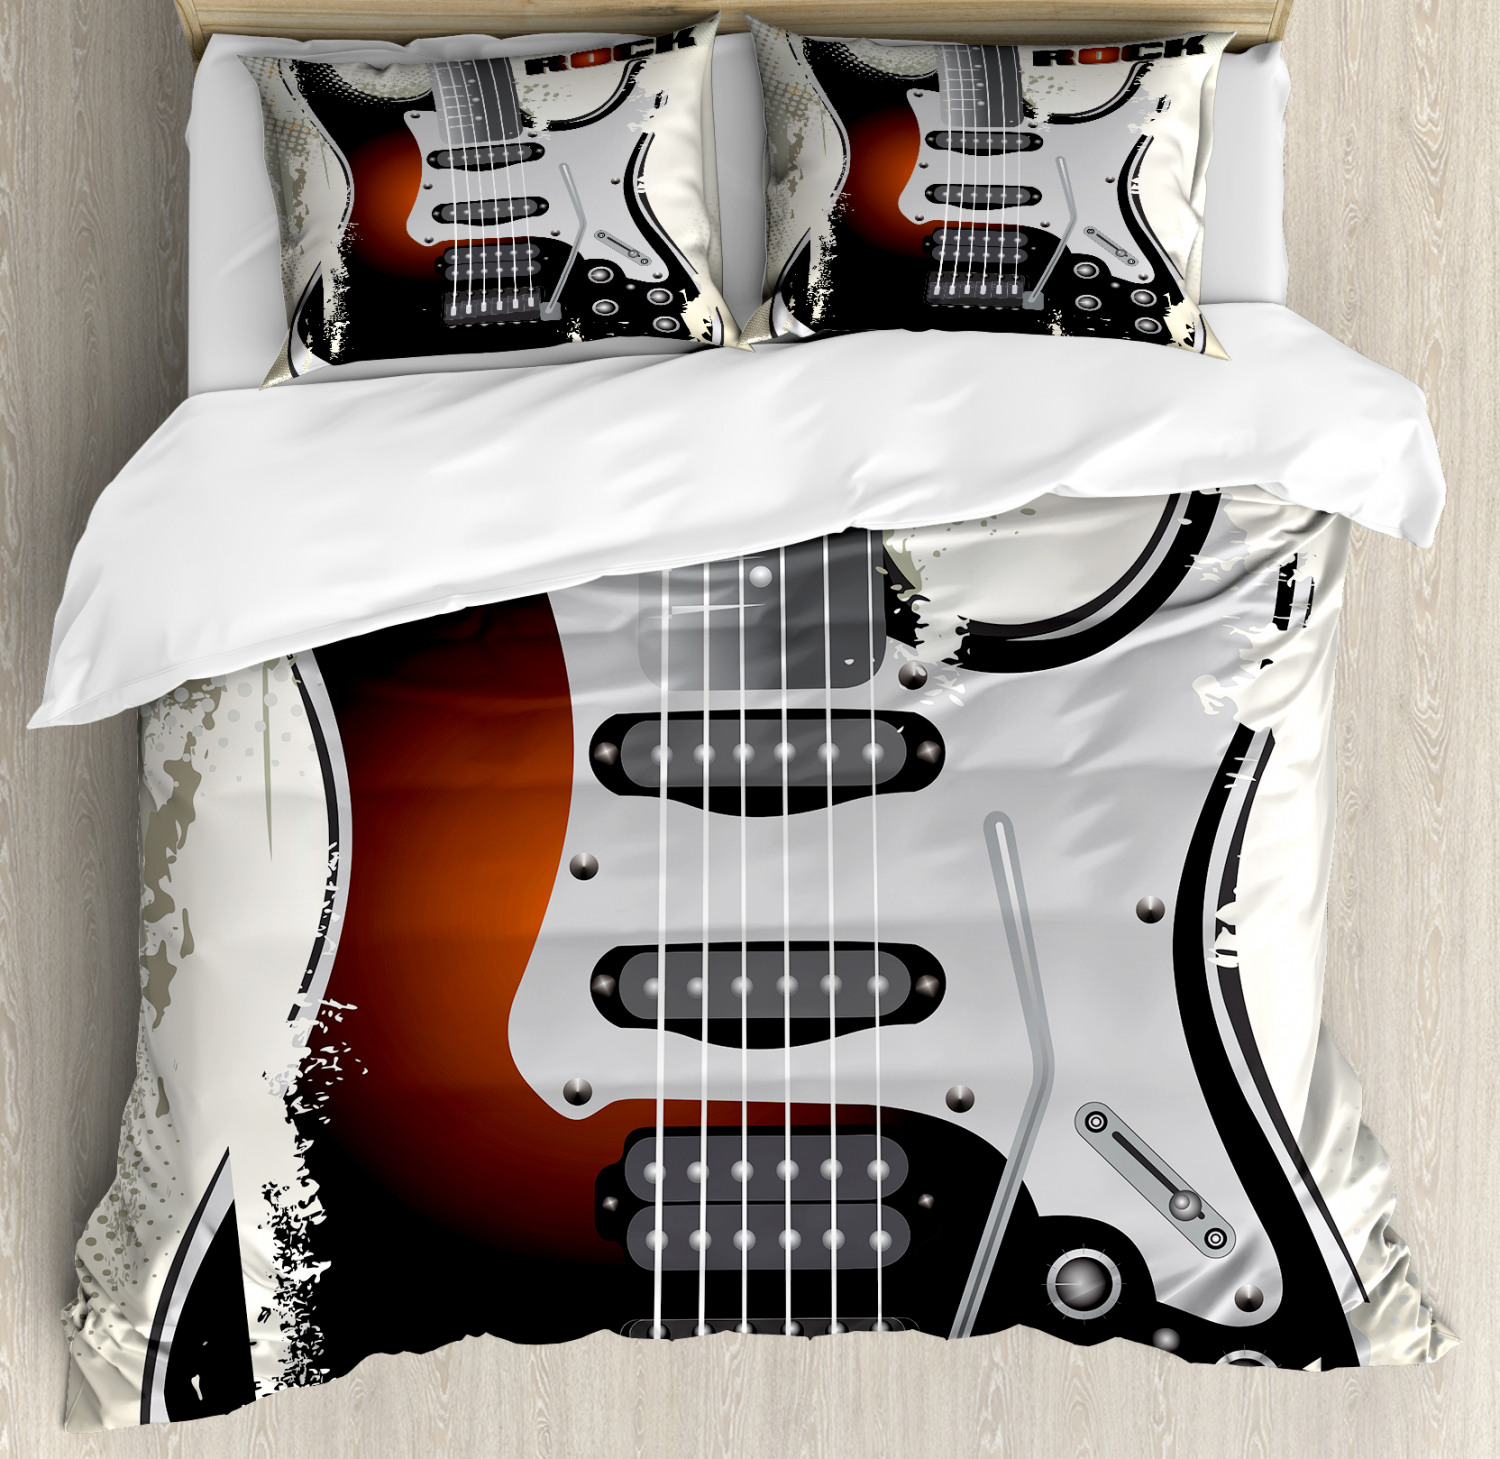 Rock Music Duvet Cover Set With Pillow Shams Retro Grunge Guitar